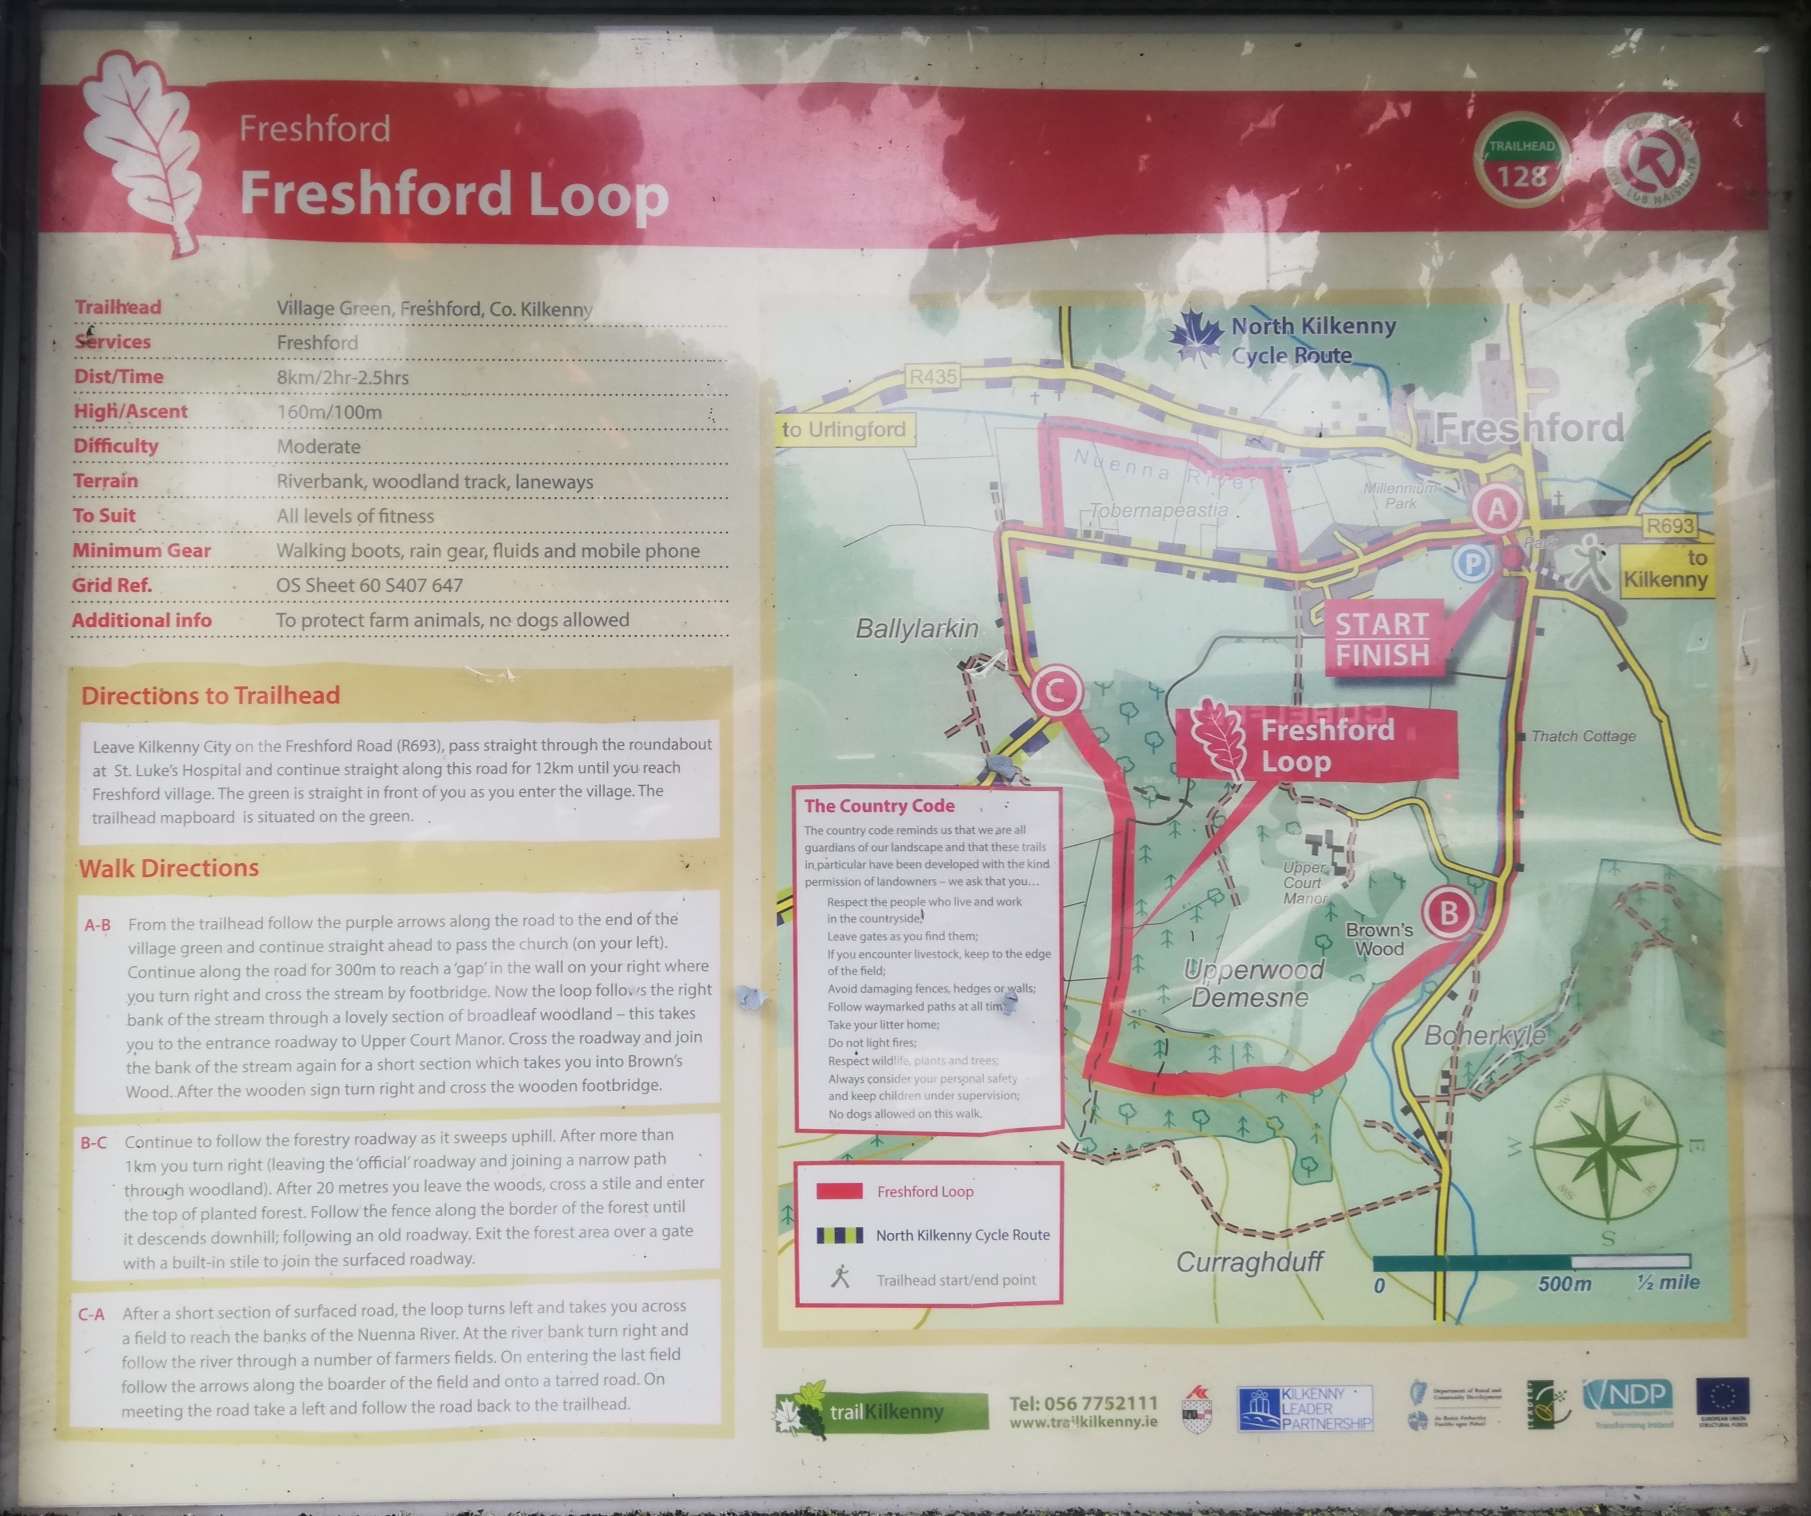 Informational sign about the Freshford Loop in Freshford, county Kilkenny